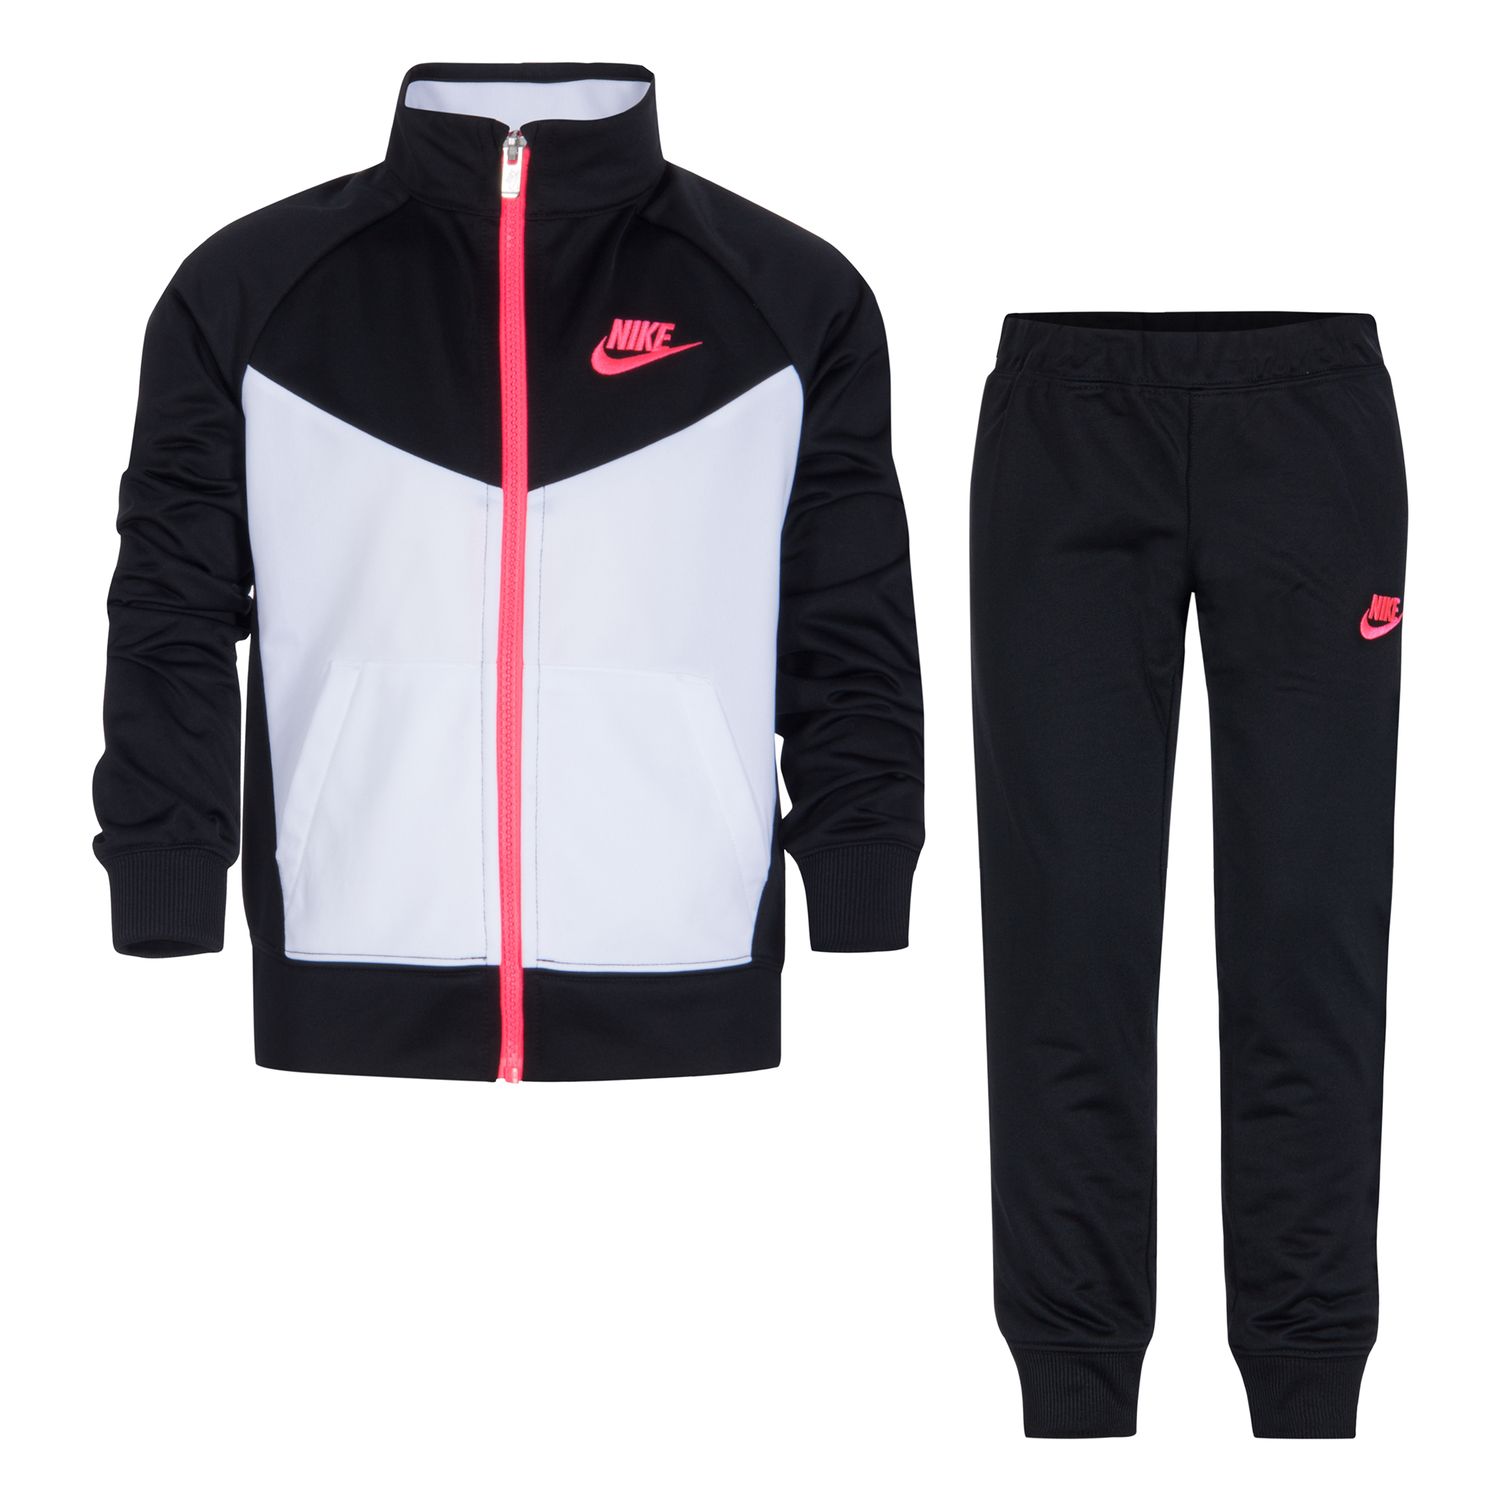 Girls 4-6x Nike Tricot Jacket \u0026 Pants 